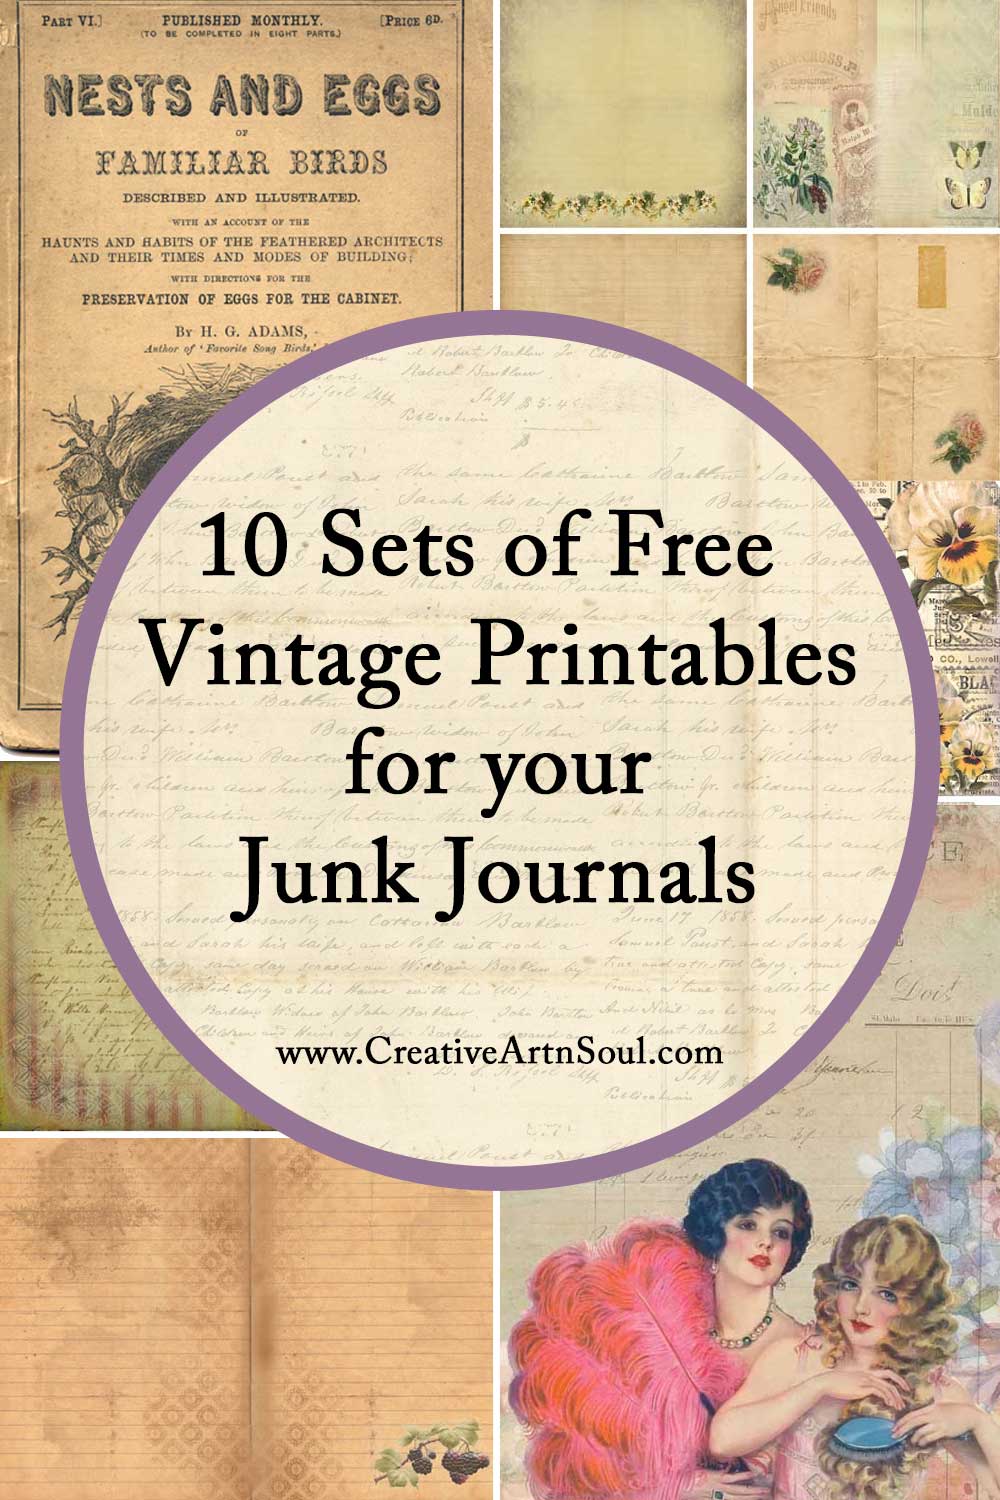 10 Sets of Free Vintage Printables for Your Junk Journals > Creative